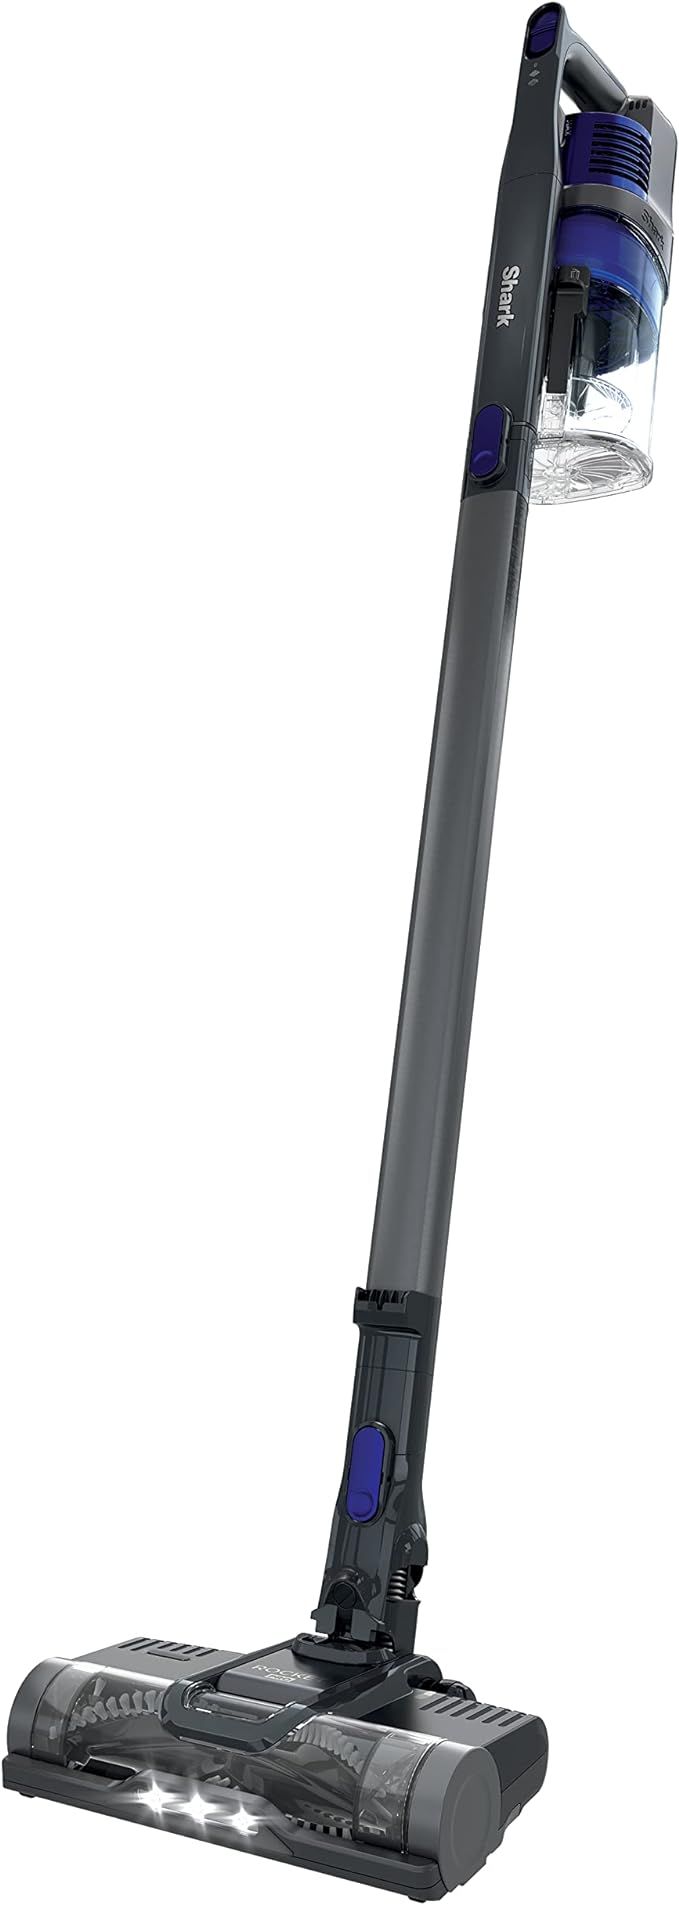 Shark IX141 Impact Cordless Stick Vacuum, 7.5 lbs, Grey | Amazon (US)